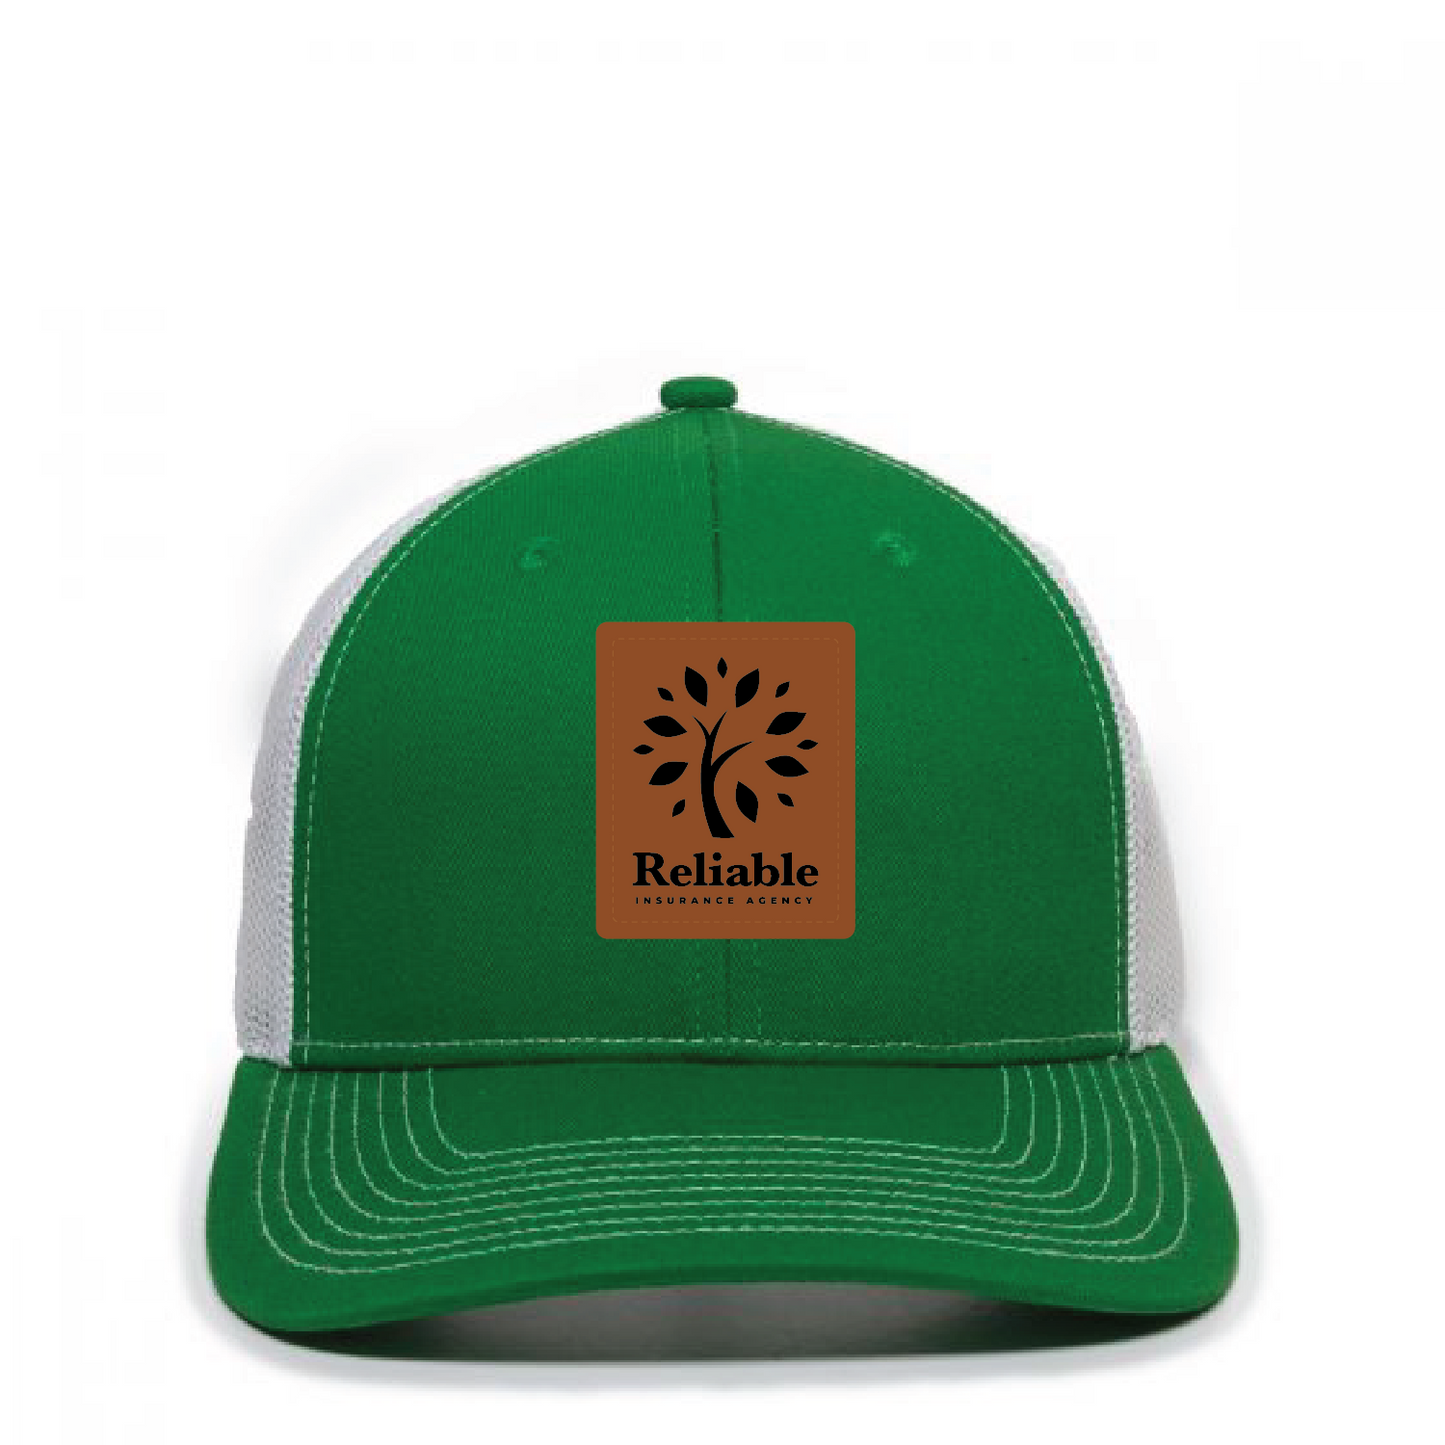 Reliable Trucker Hats